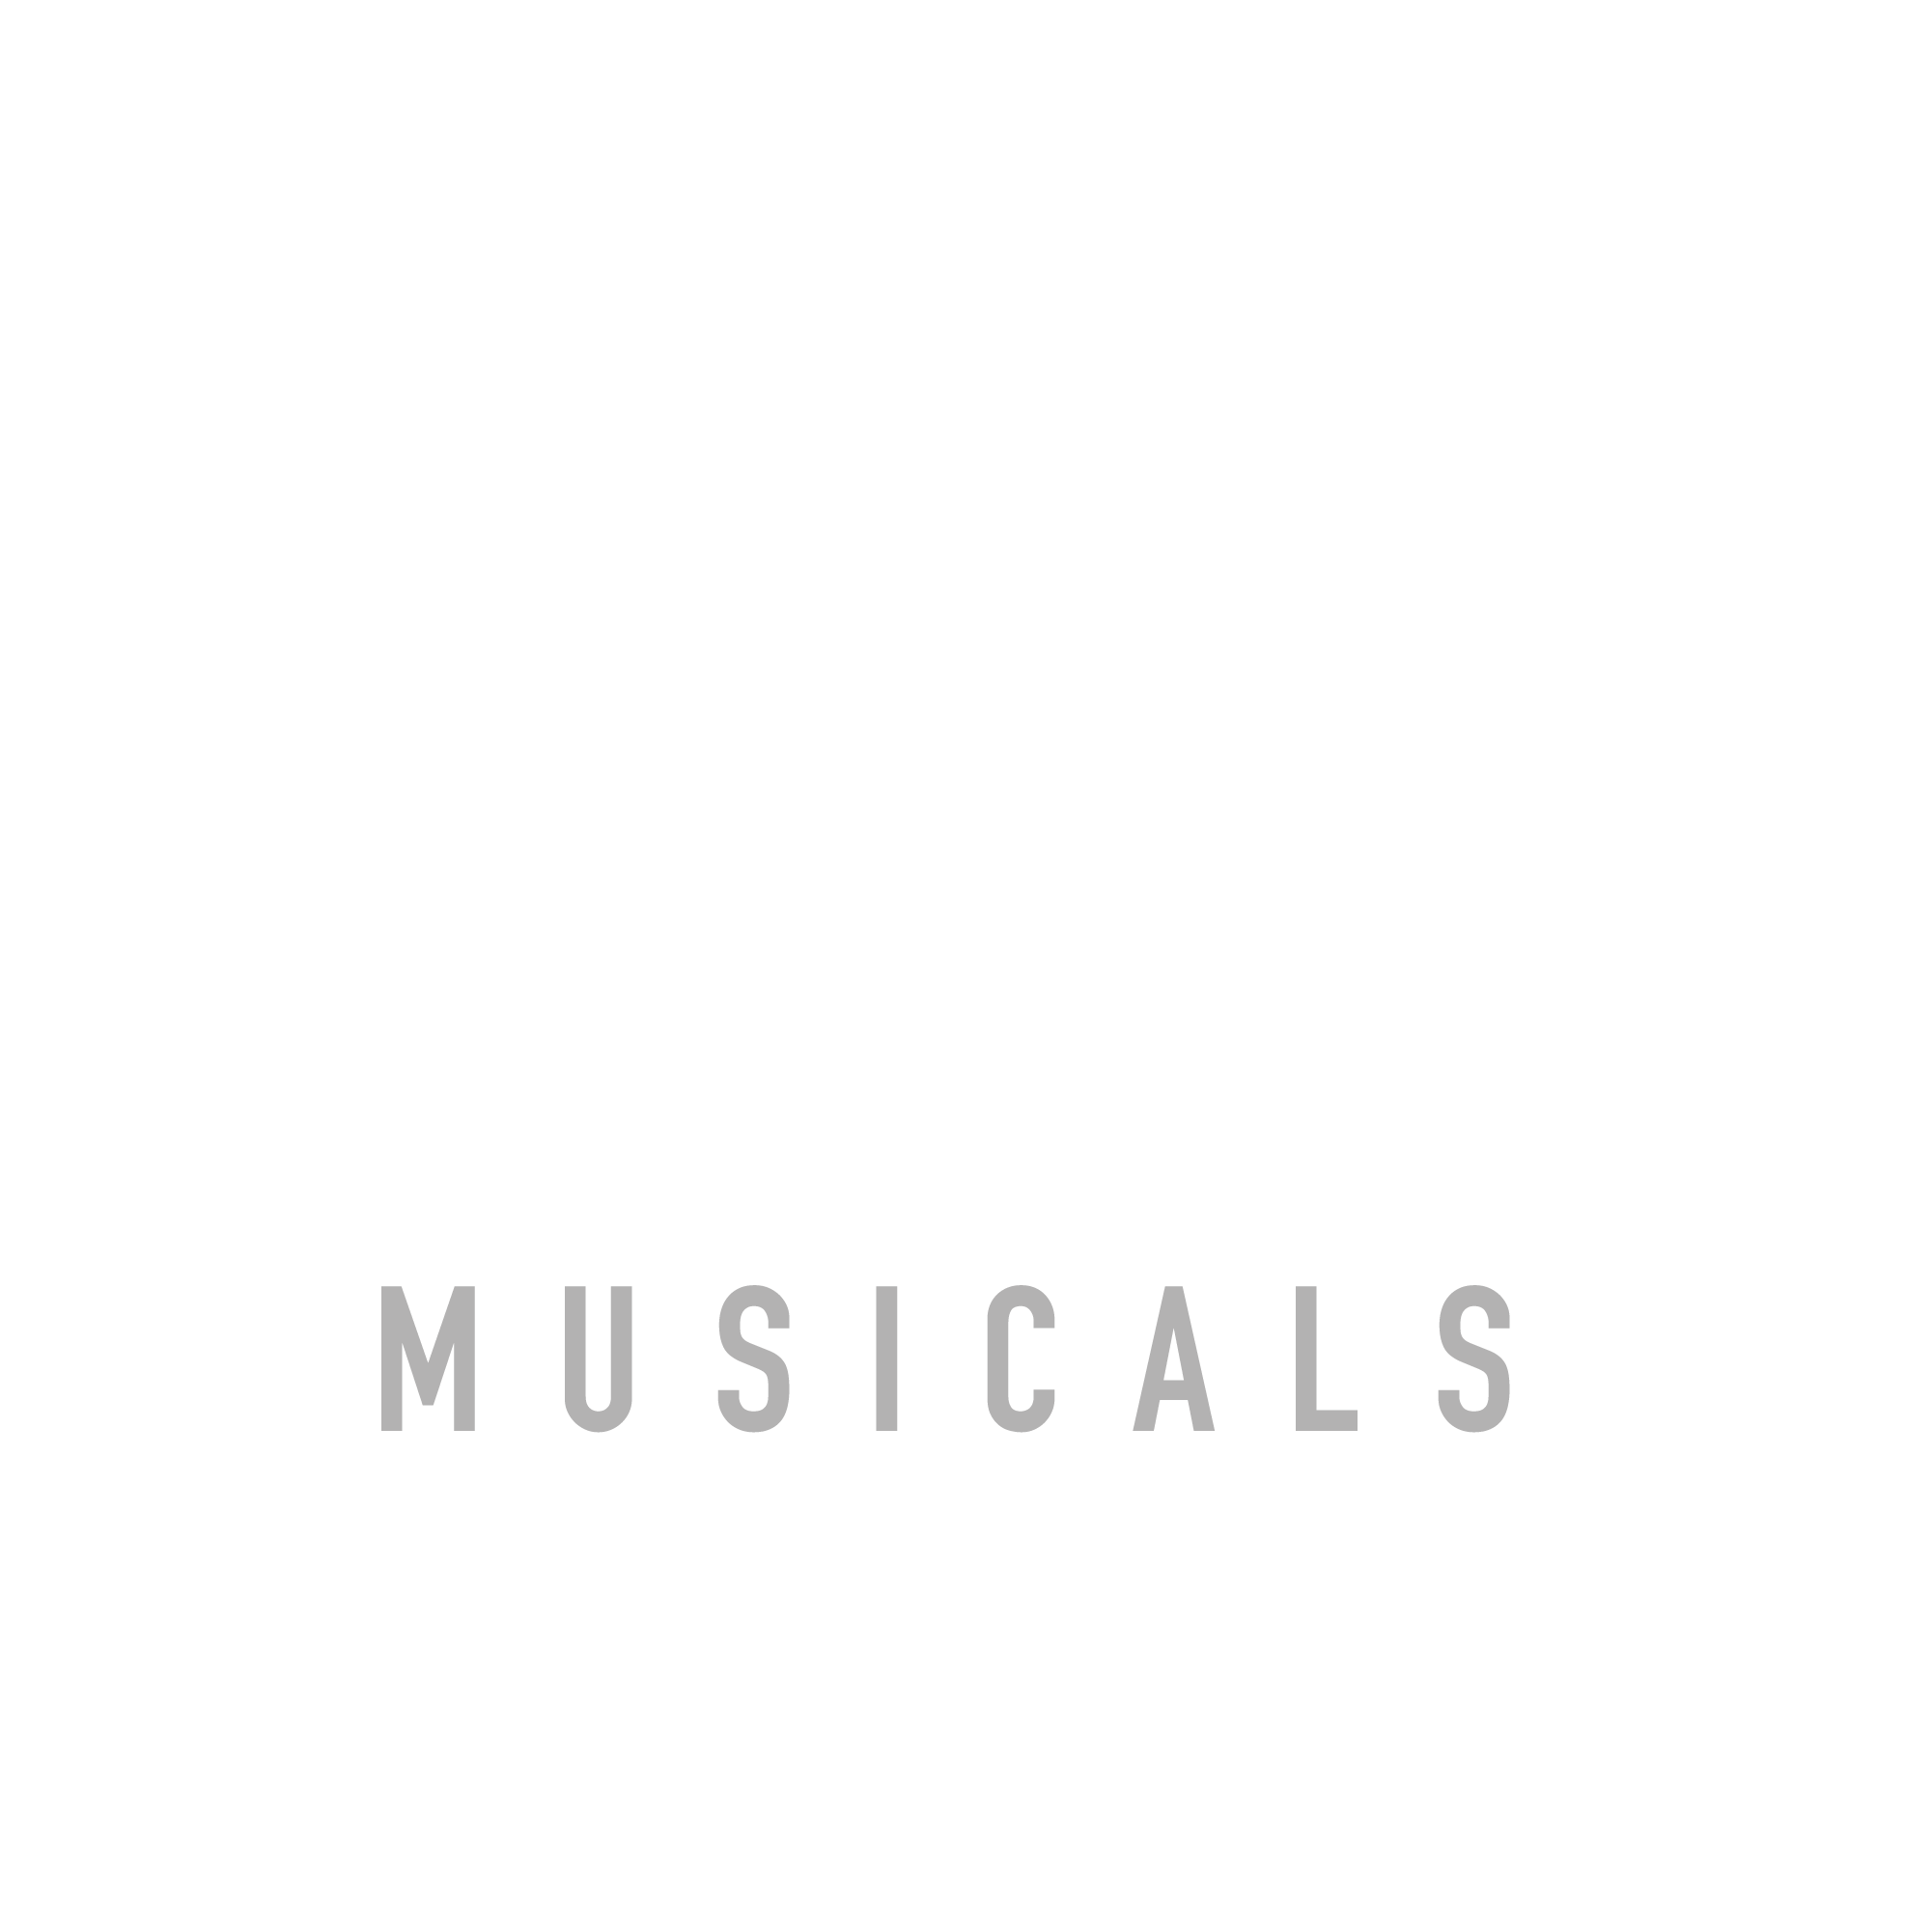 AZOV Musicals